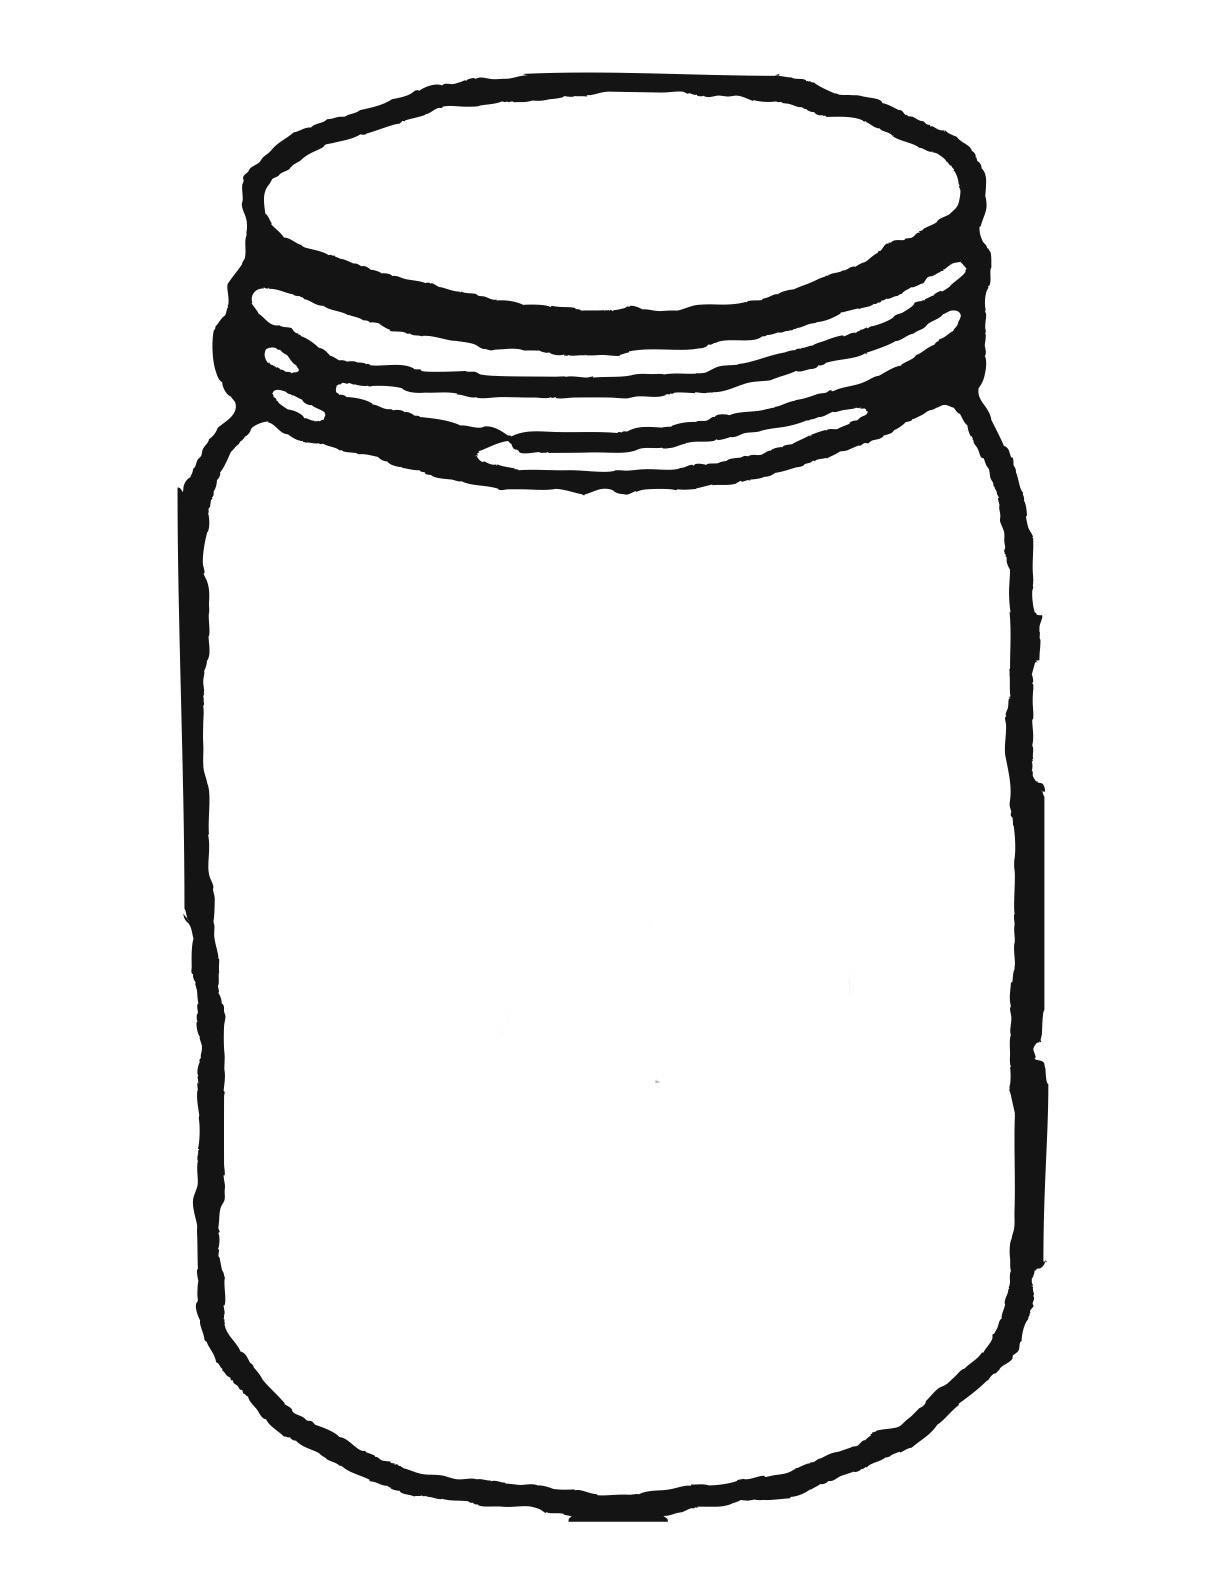 Jar clipart